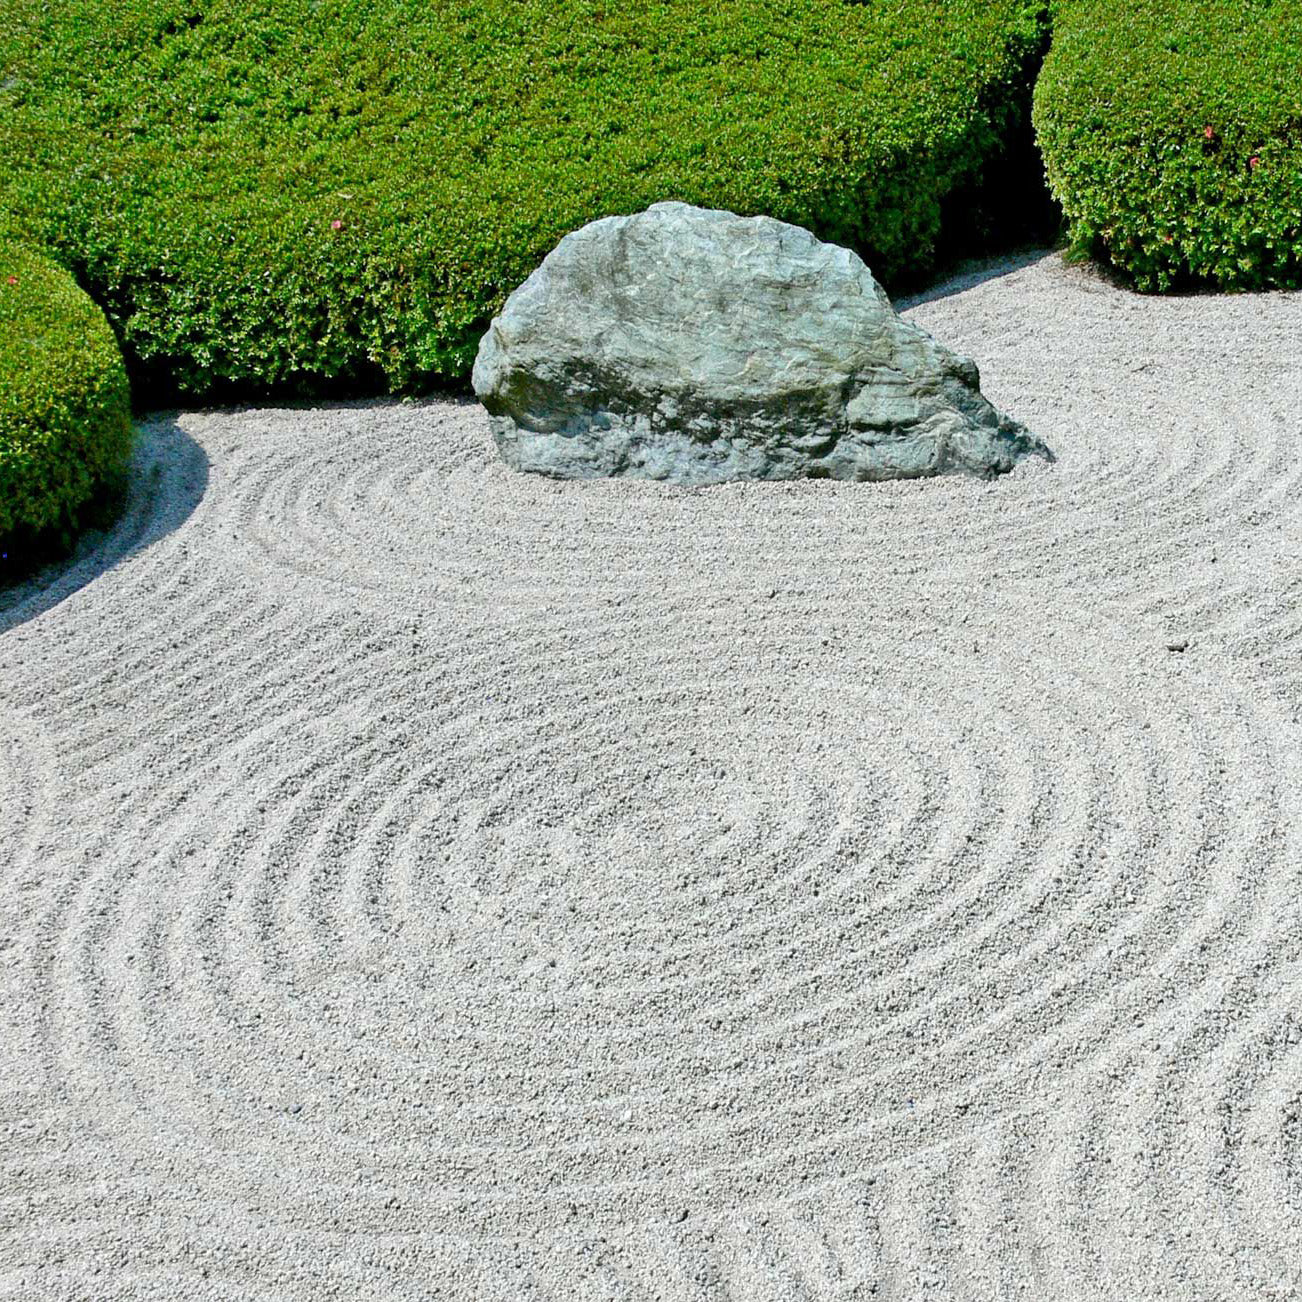 Cekitay Zen Garden Cup and Saucer - White Sand